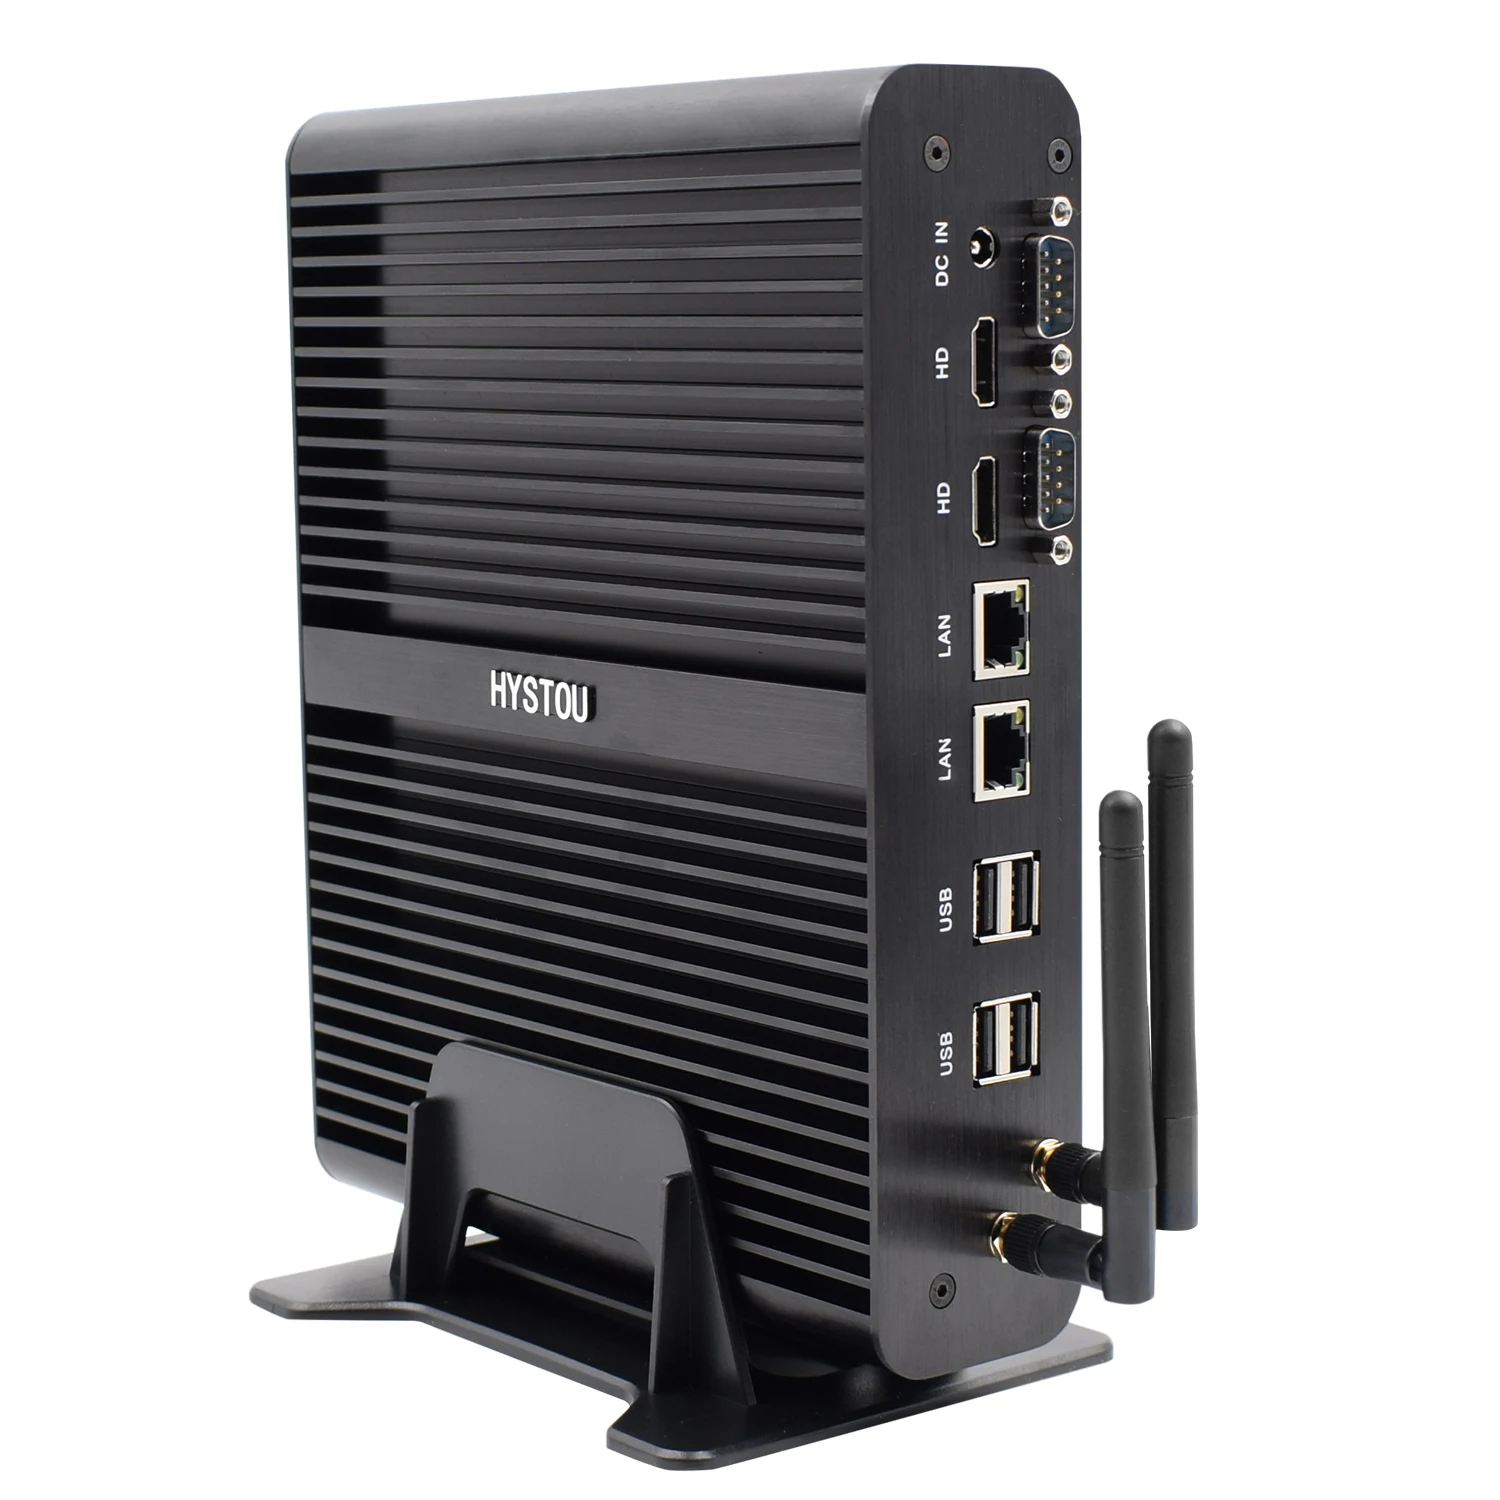 

HYSTOU Mini Itx Pc Intel Core I7 Processor Windows 7 Linux Tv Box Desktops Computer